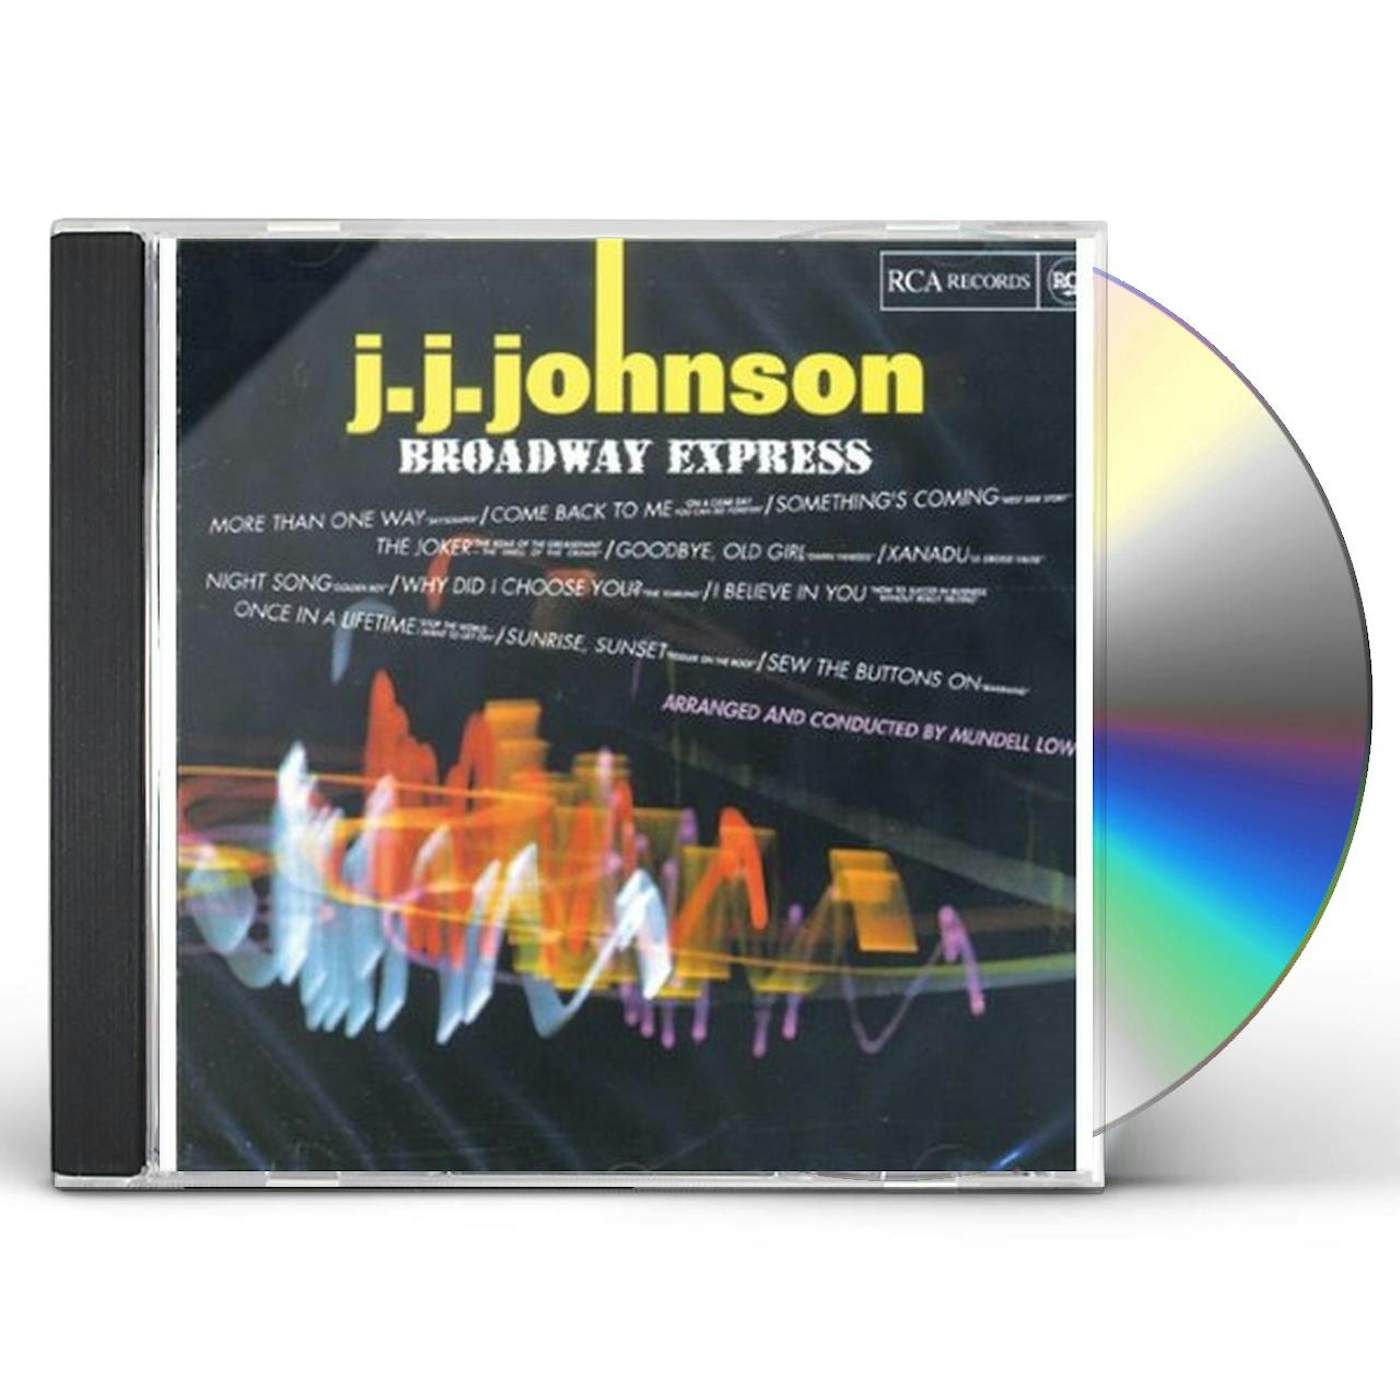 J.J. Johnson BROADWAY EXPRESS CD